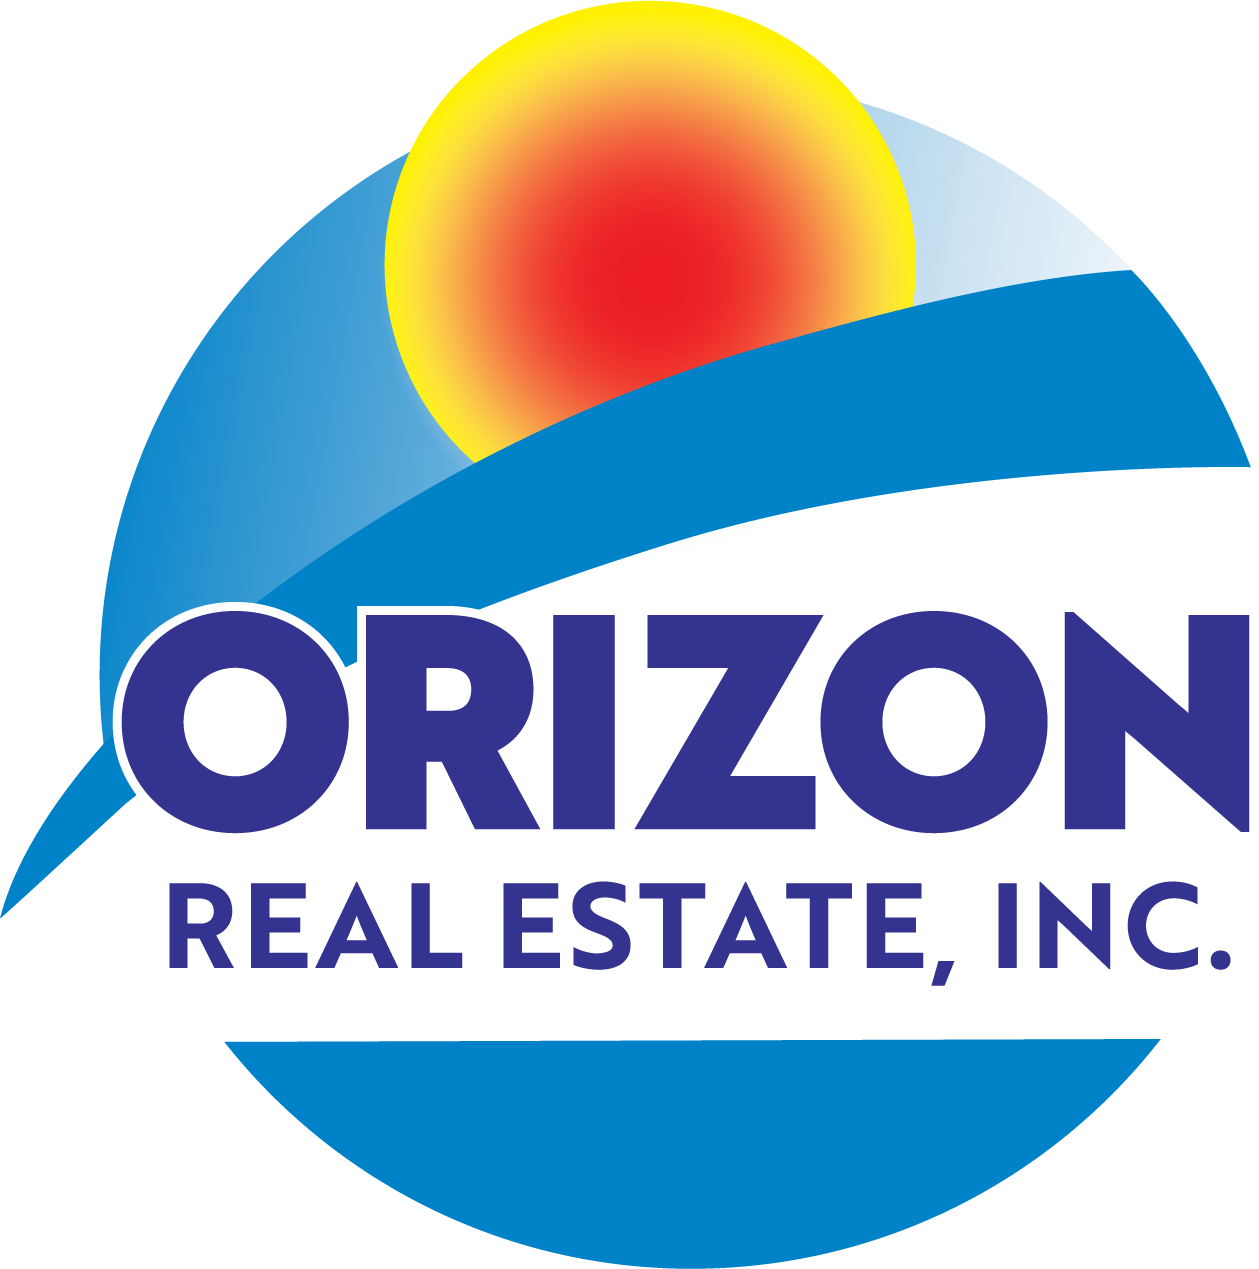 Orizon Real Estate